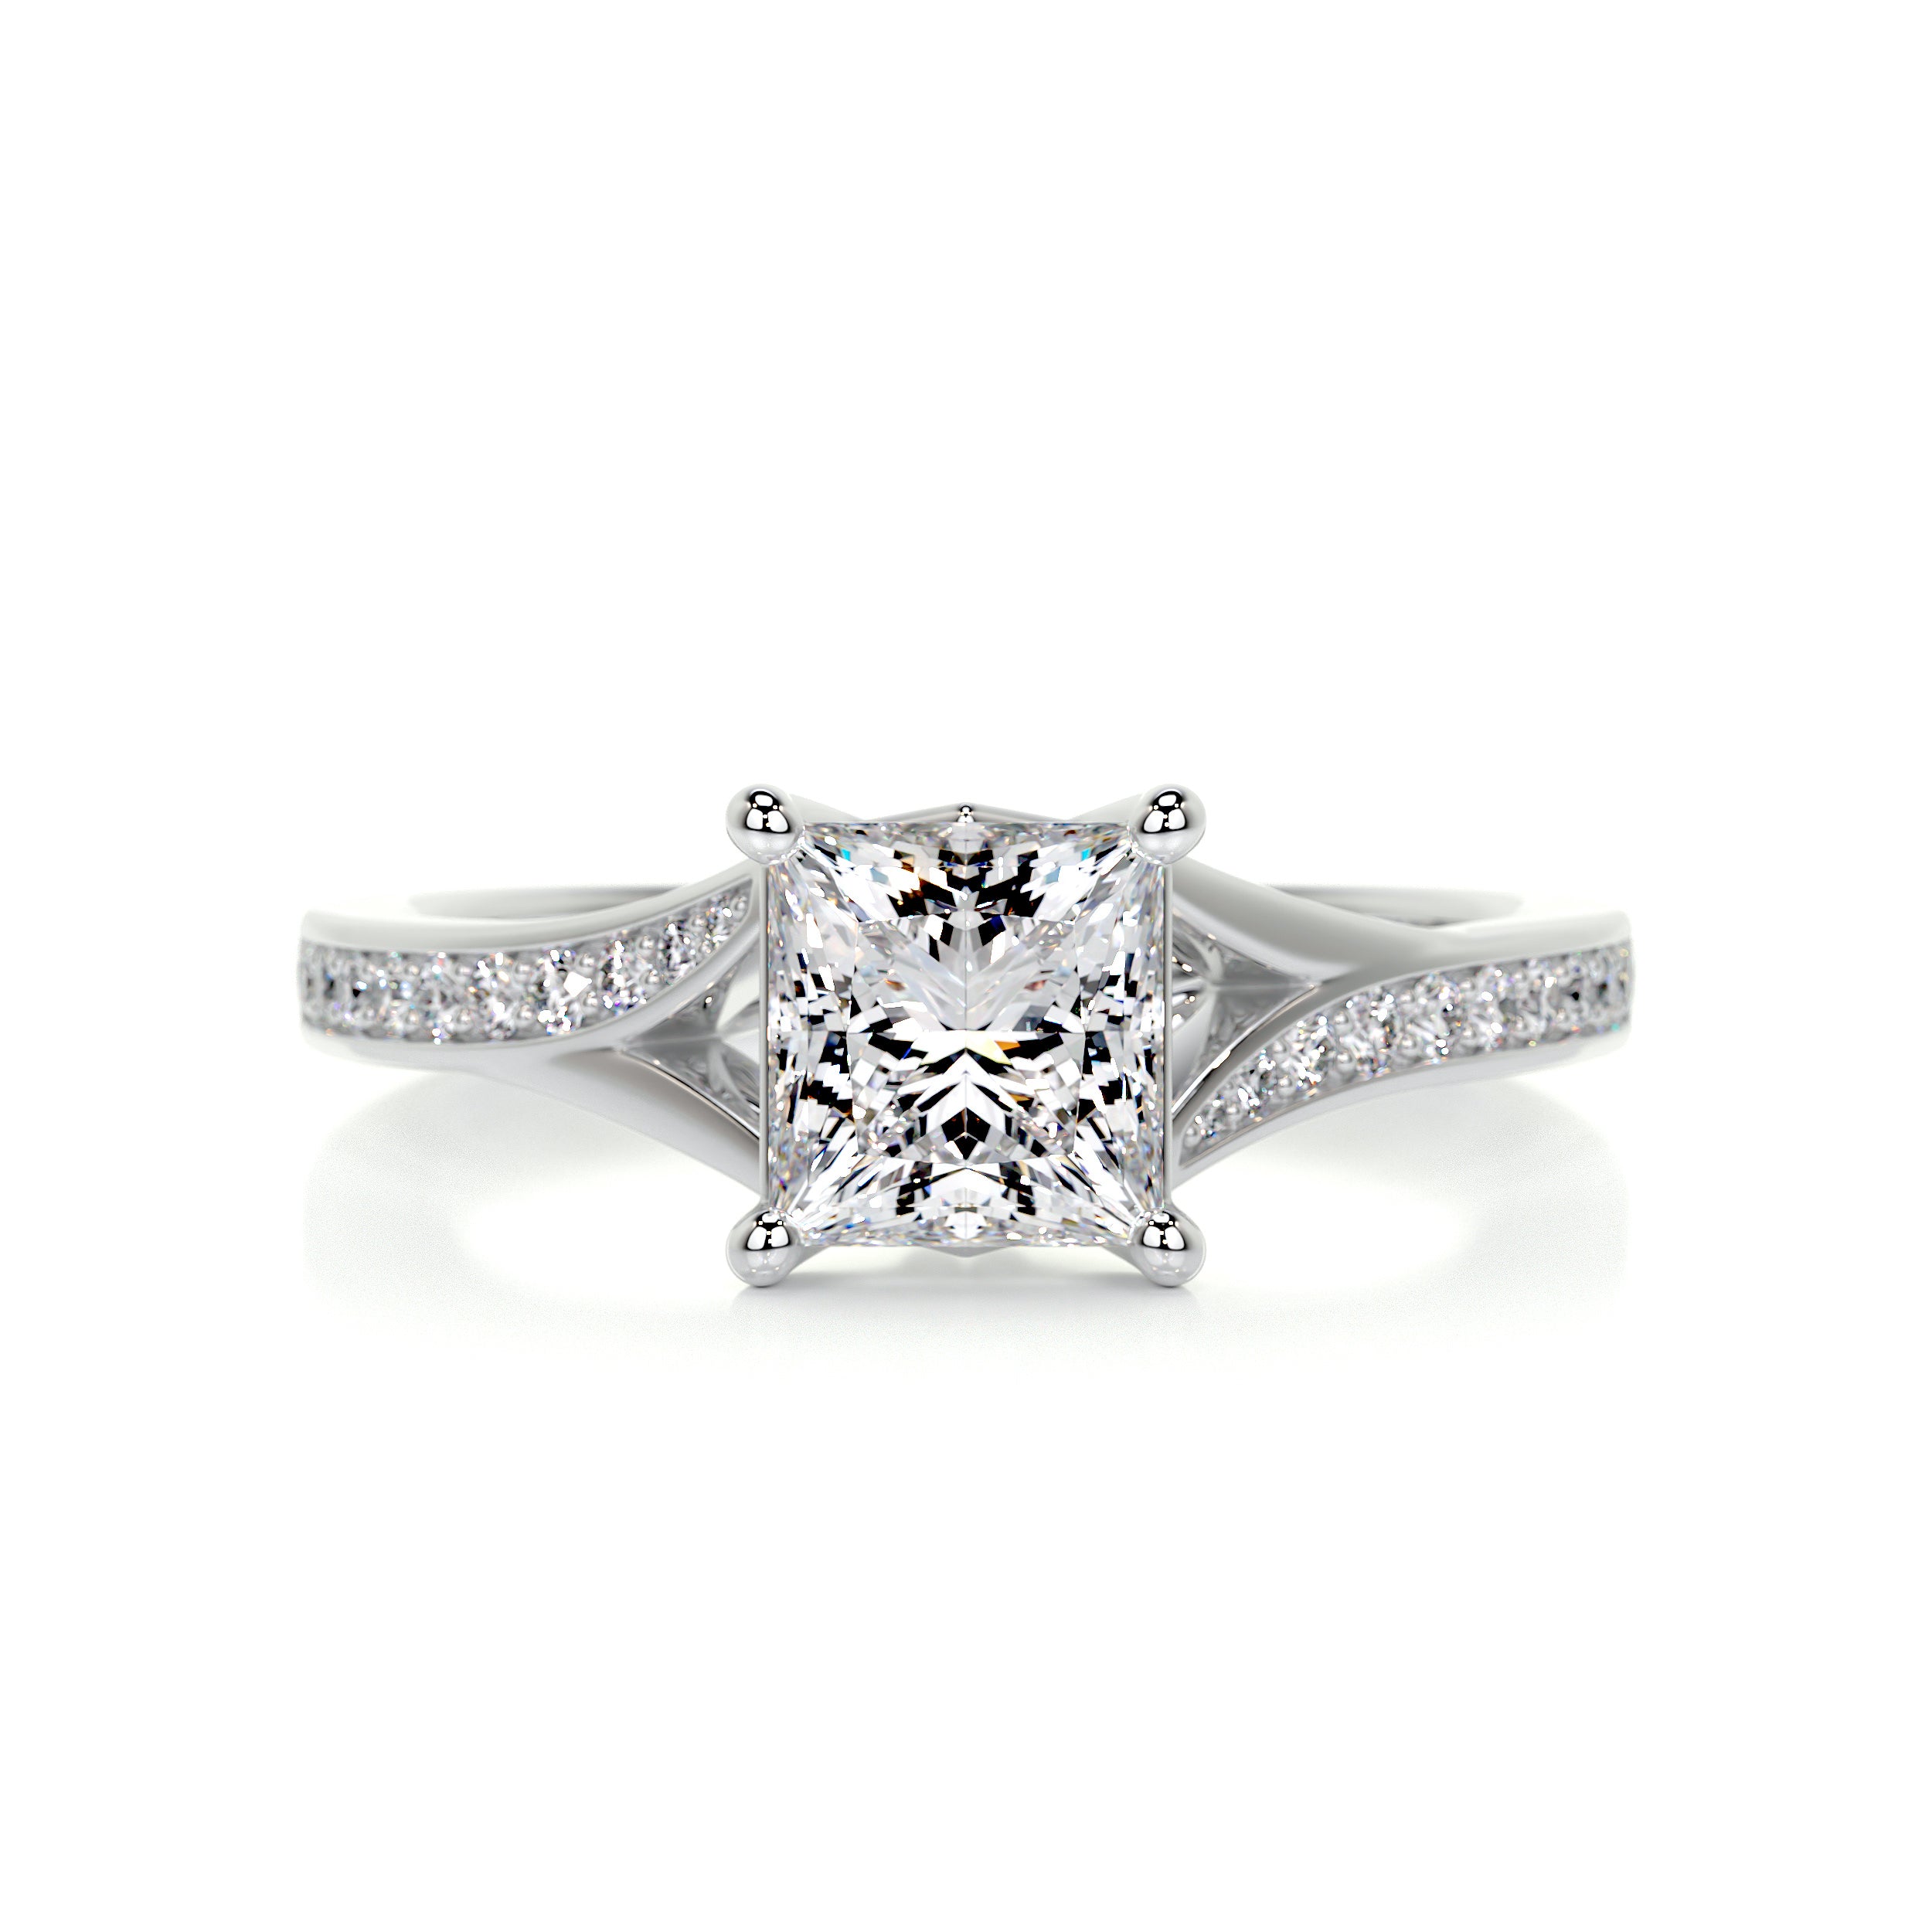 Alexandria Diamond Engagement Ring   (1.15 Carat) -18K White Gold